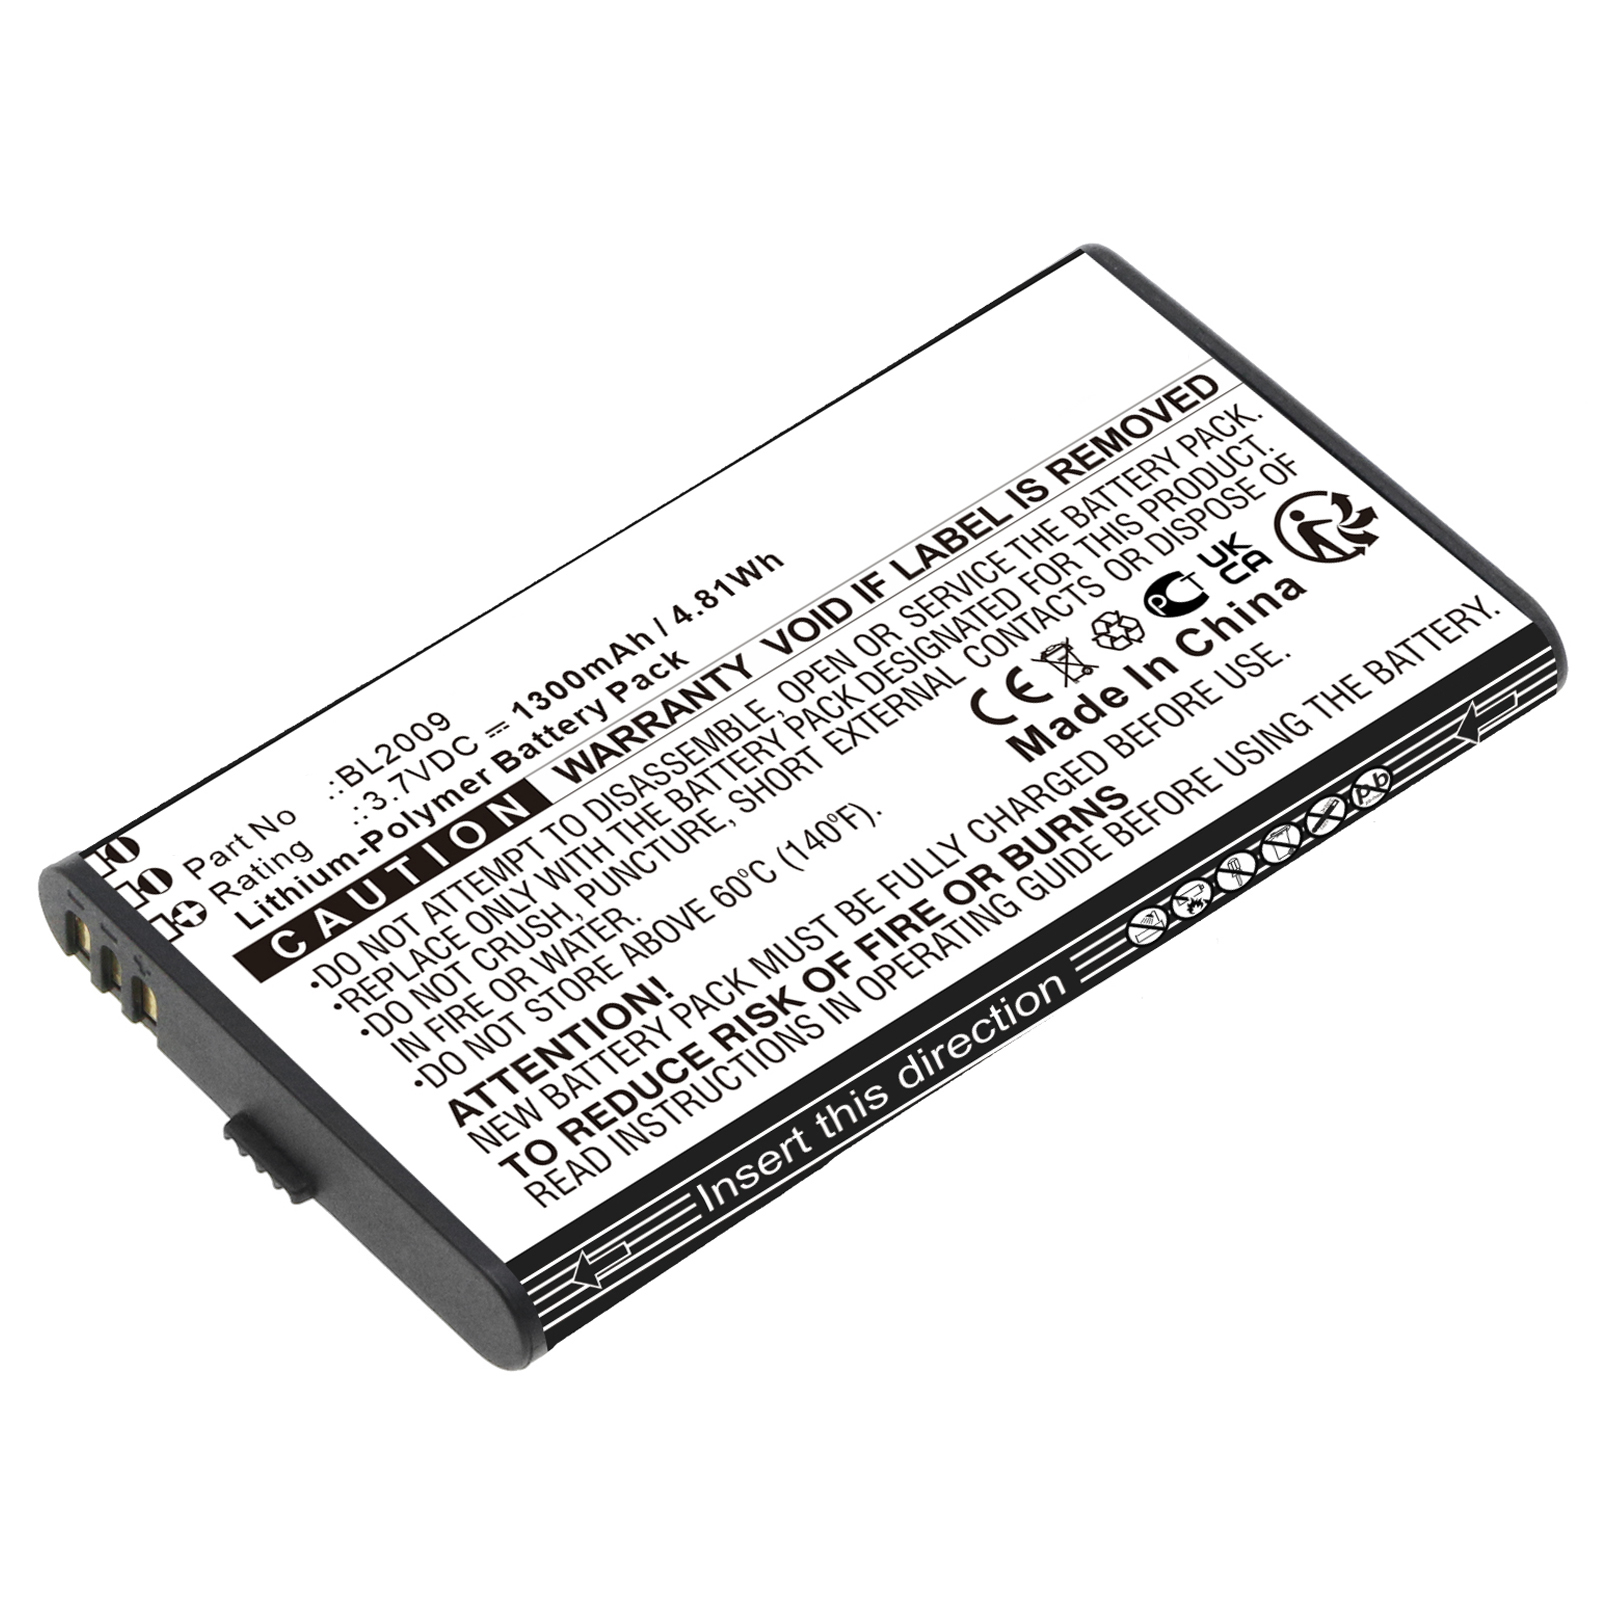 Synergy Digital 2-Way Radio Battery, Compatible with Hytera BL2009 2-Way Radio Battery (Li-Pol, 3.7V, 1300mAh)